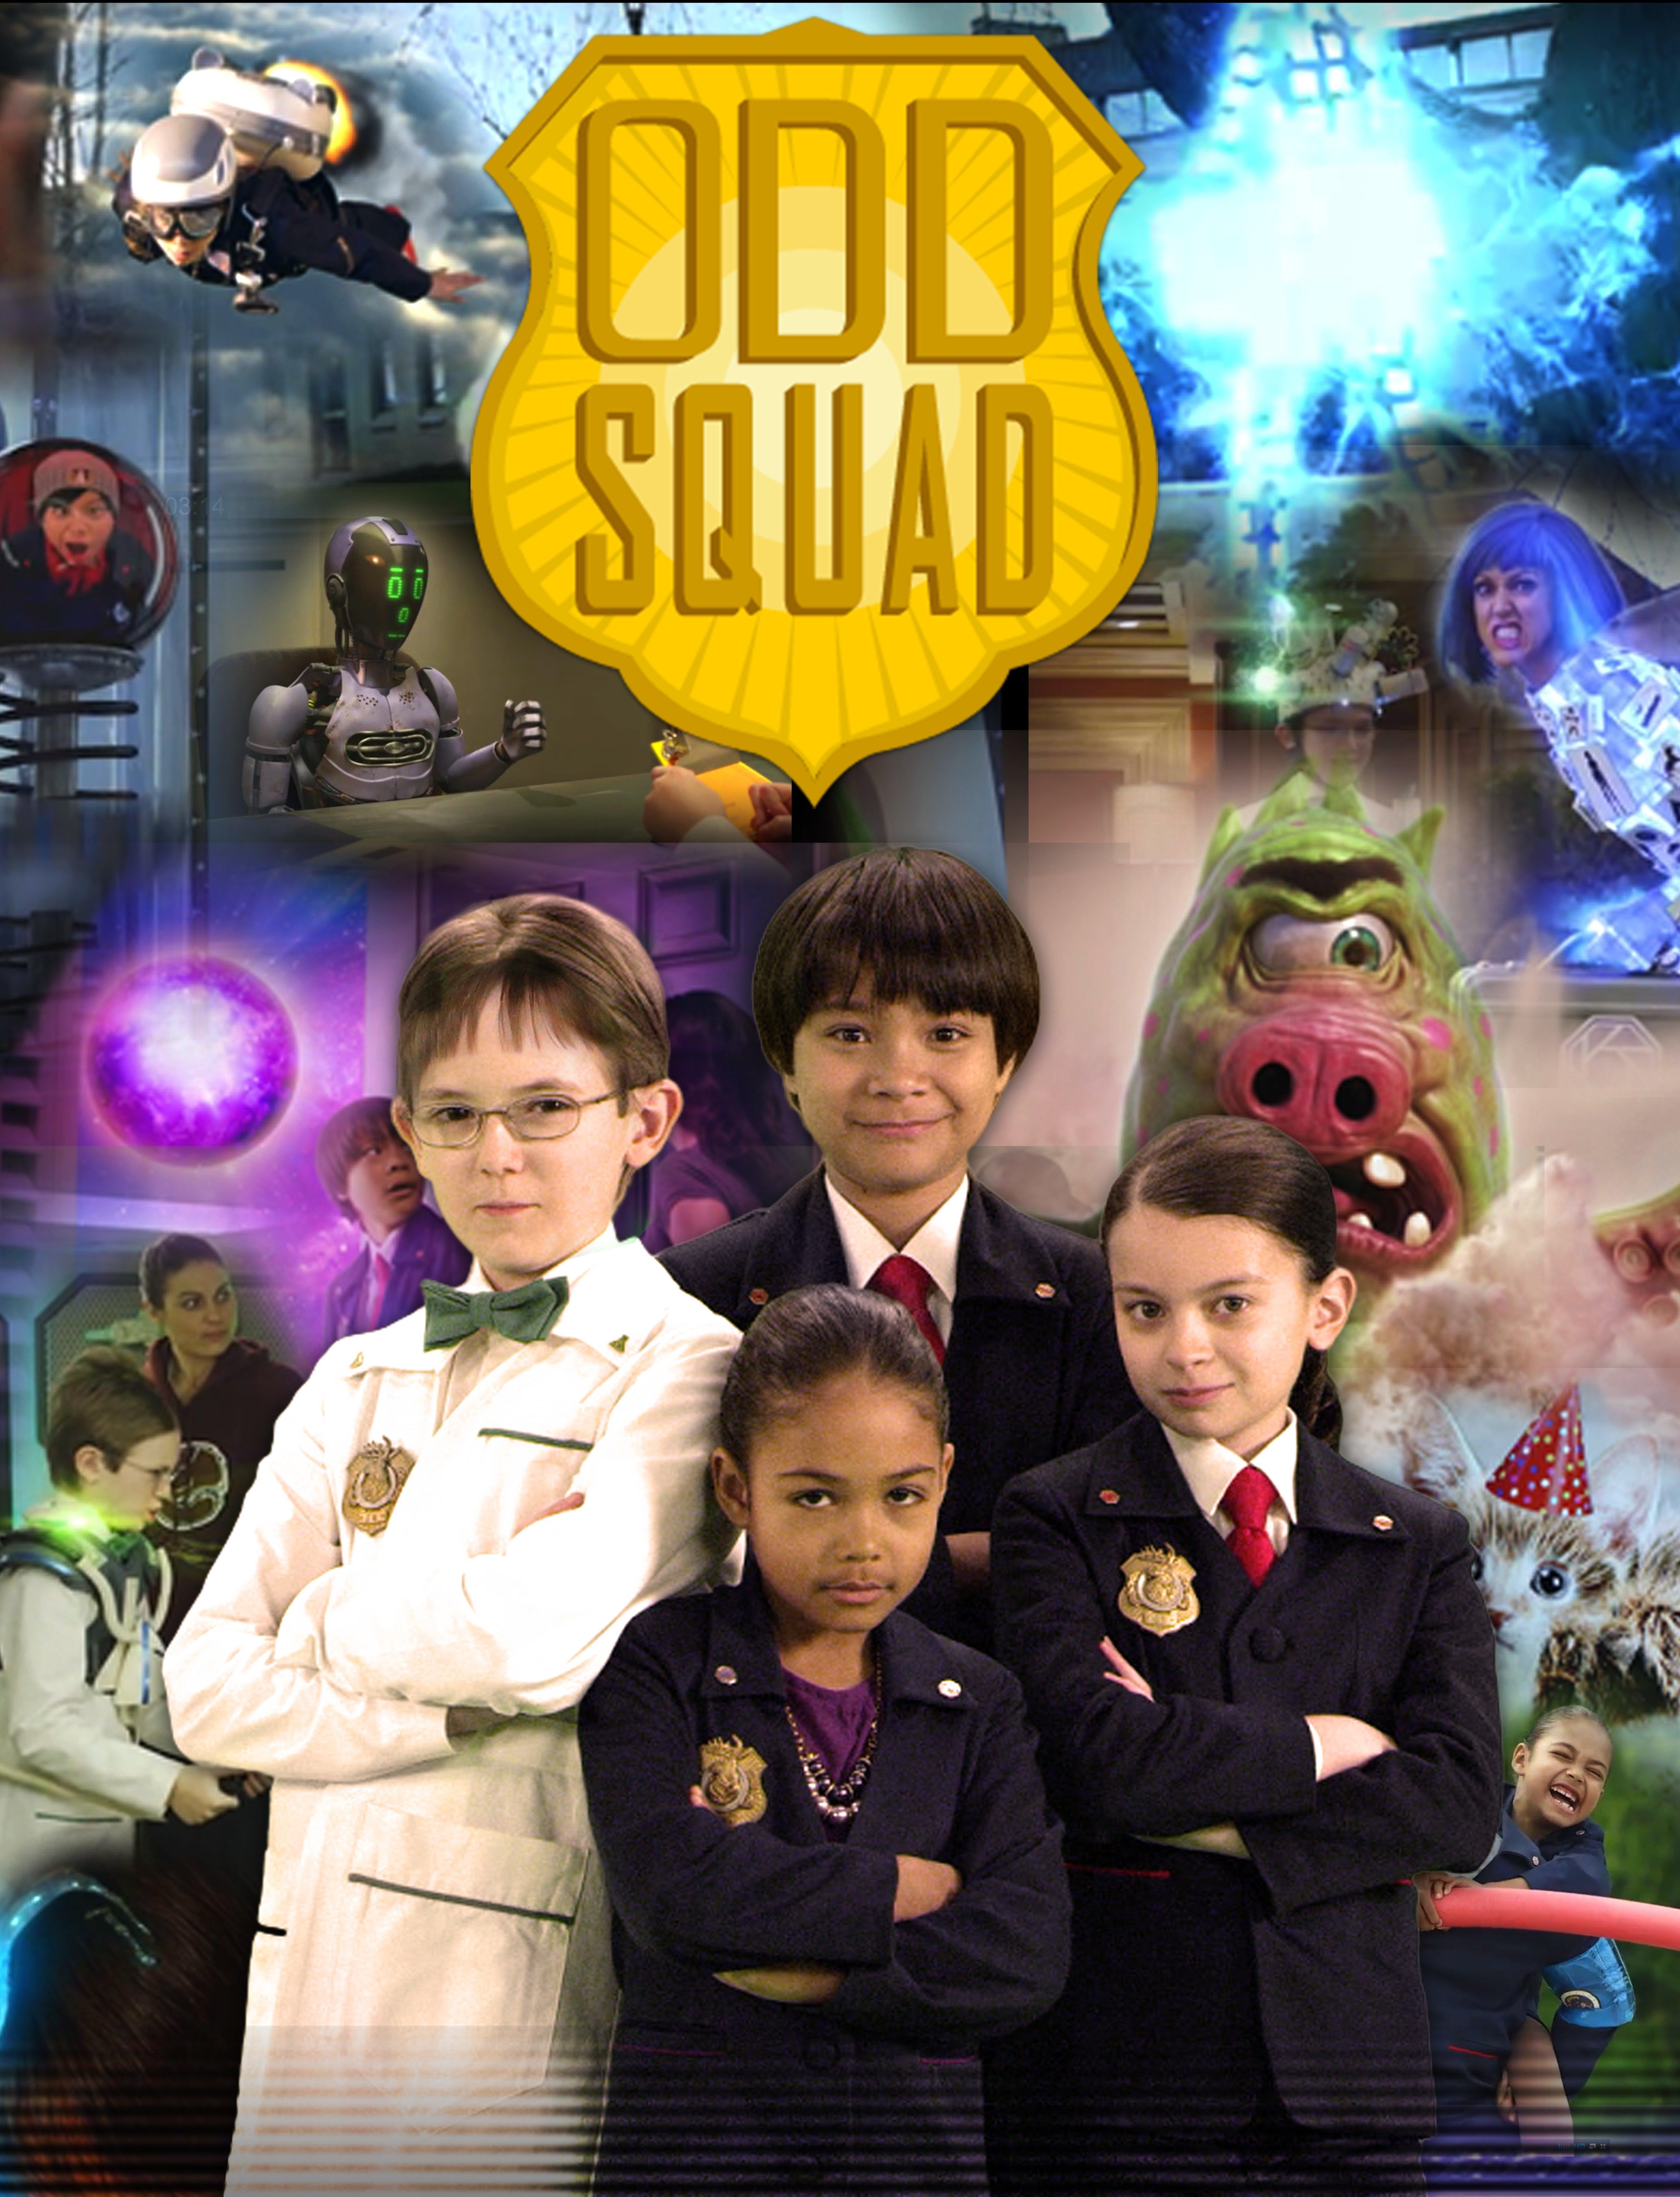 Odd Squad (TV Series 2014– )